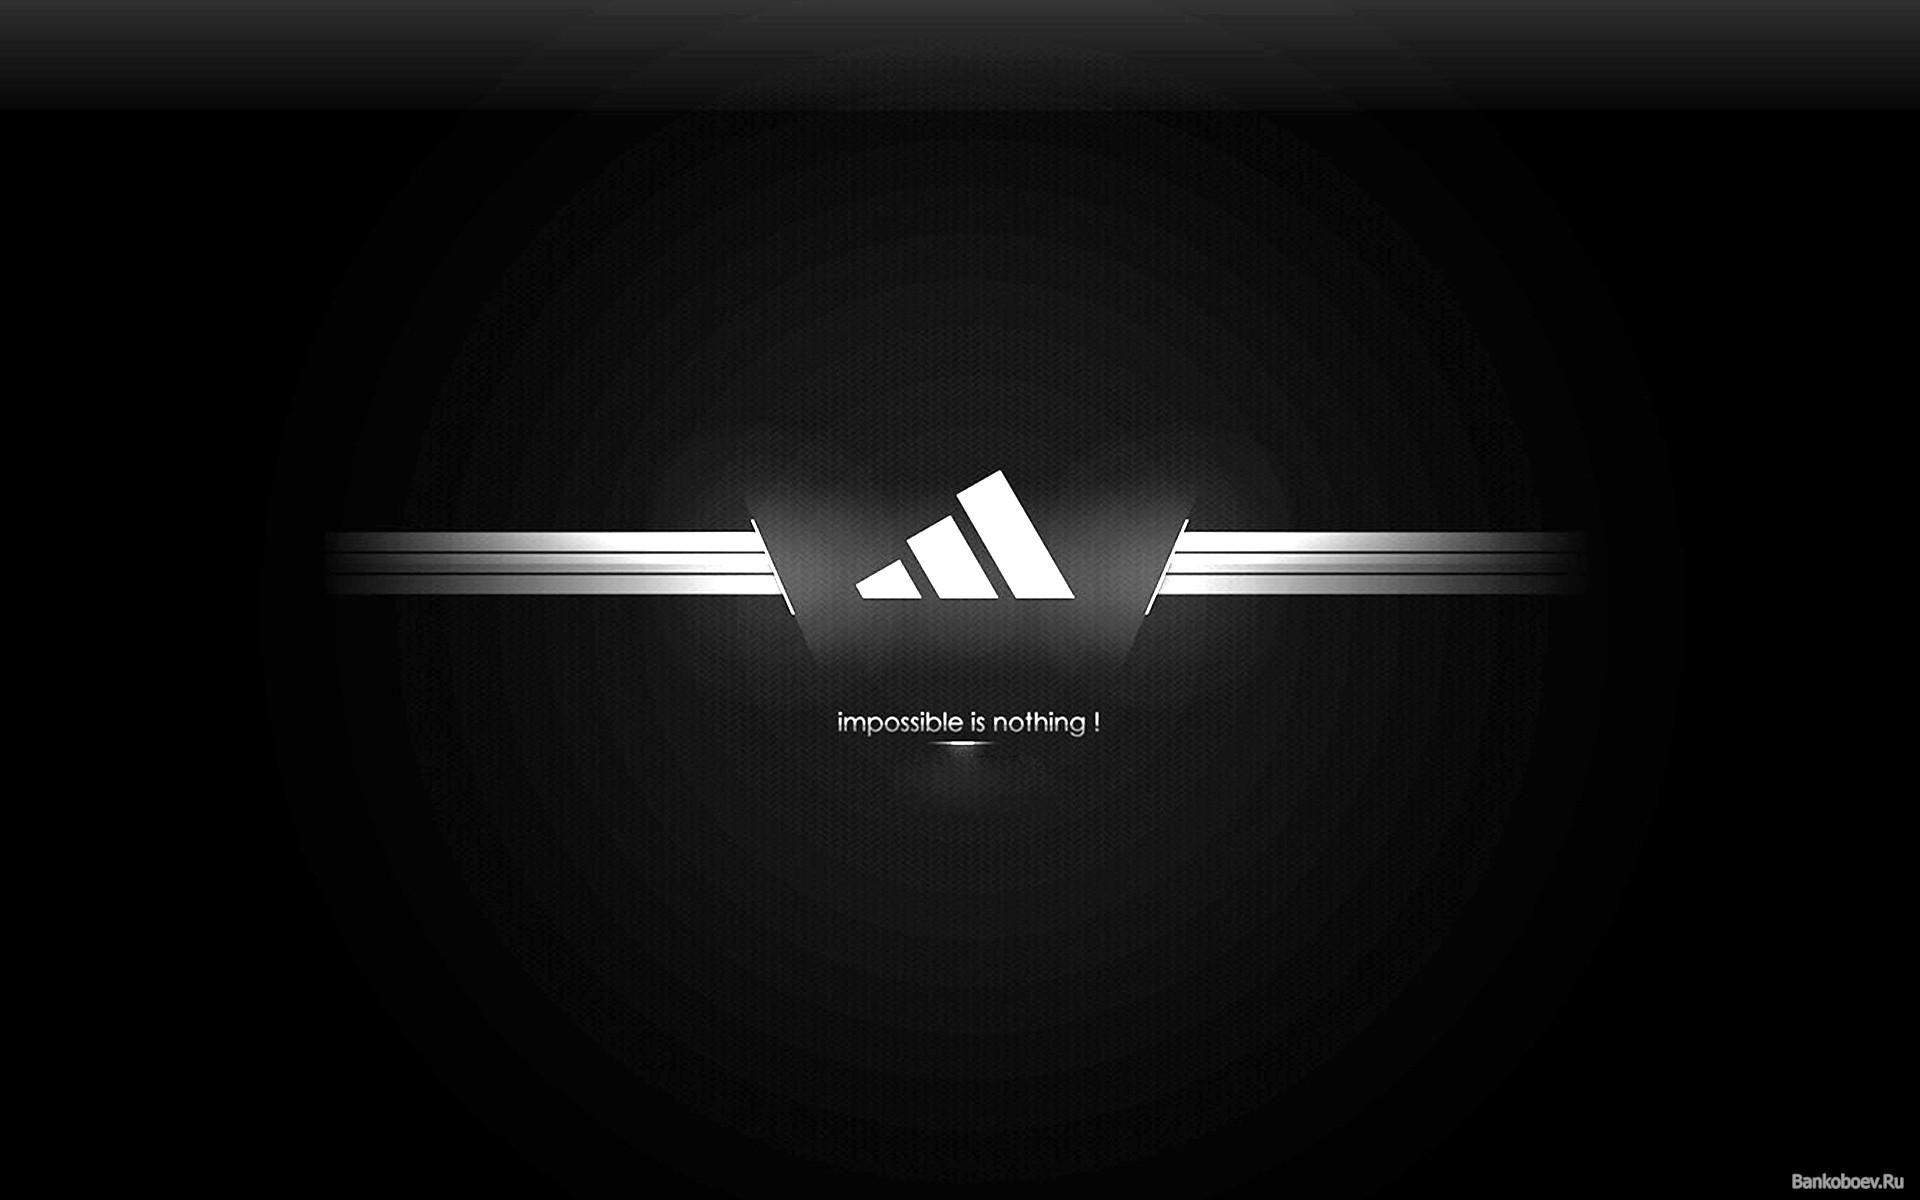 Adidas Logo Wallpaper HD By K1ngston. HD Wallpaper